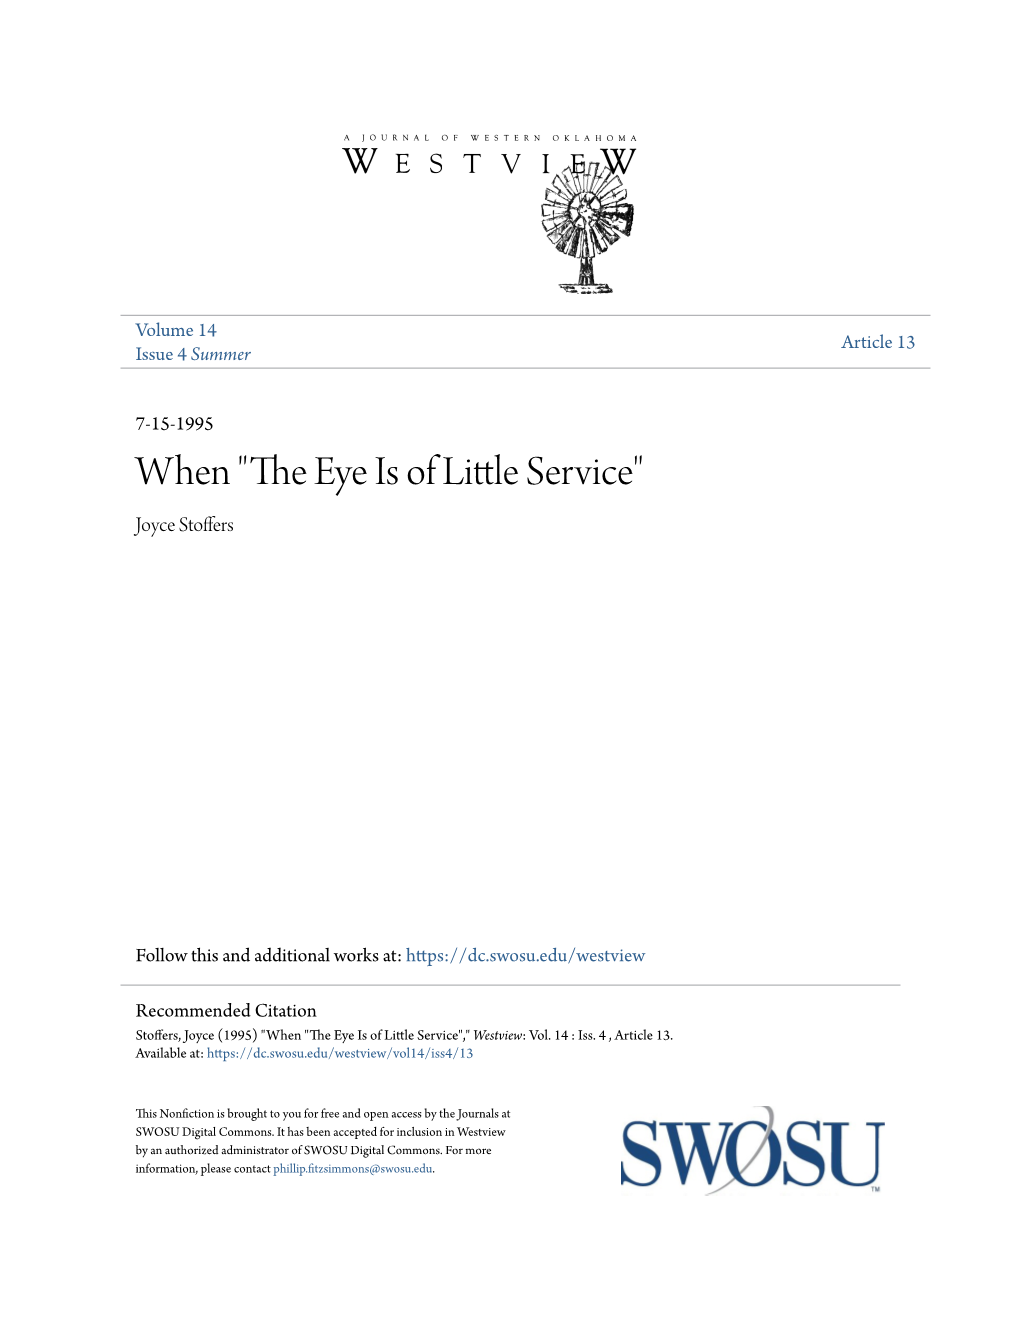 When "The Eye Is of Little Service"